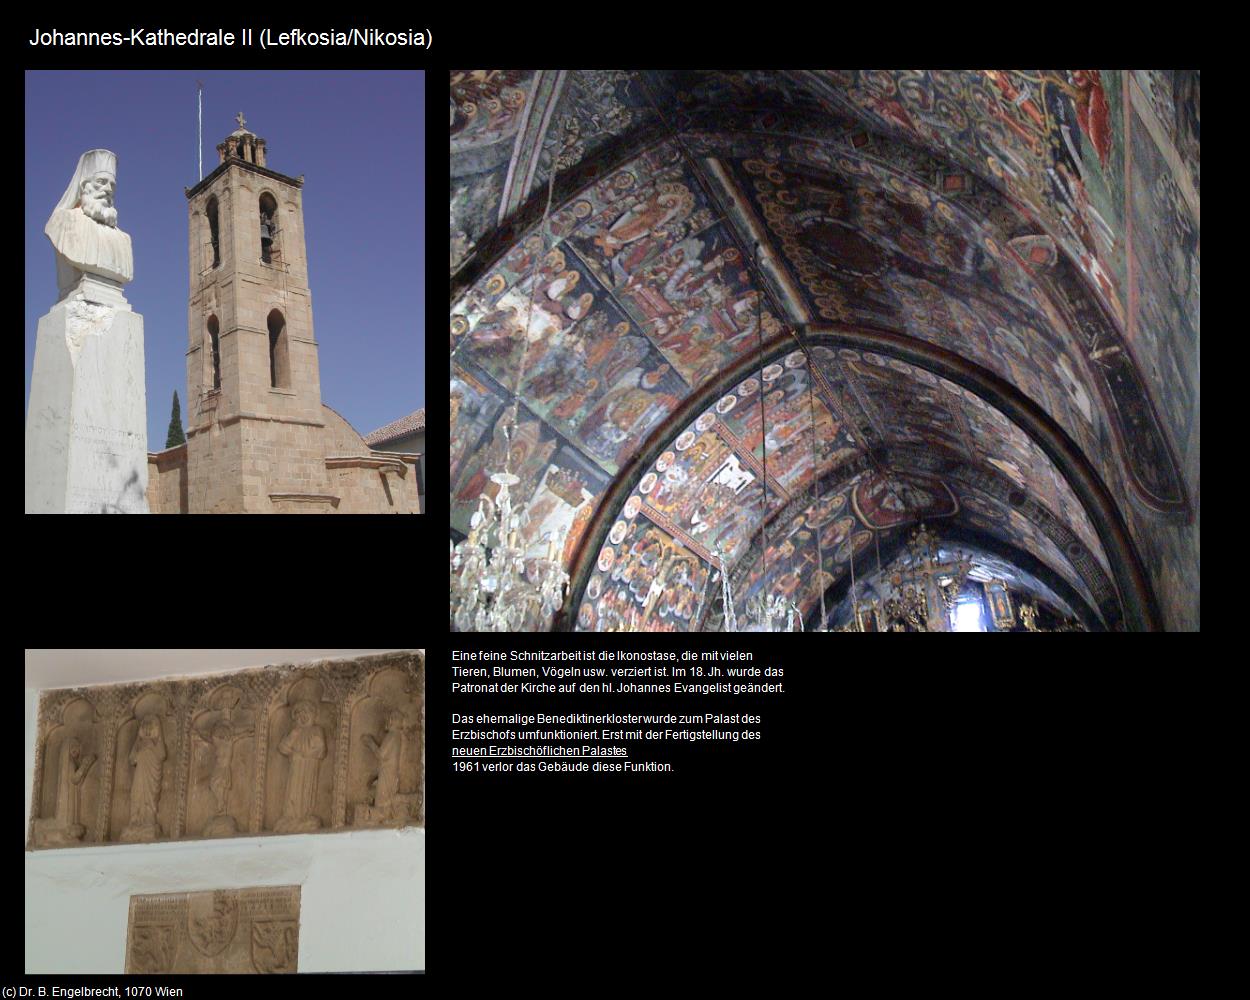 Johannes-Kathedrale II (Lefkosia-Nikosia/CY) in ZYPERN-Insel der Aphrodite(c)B.Engelbrecht